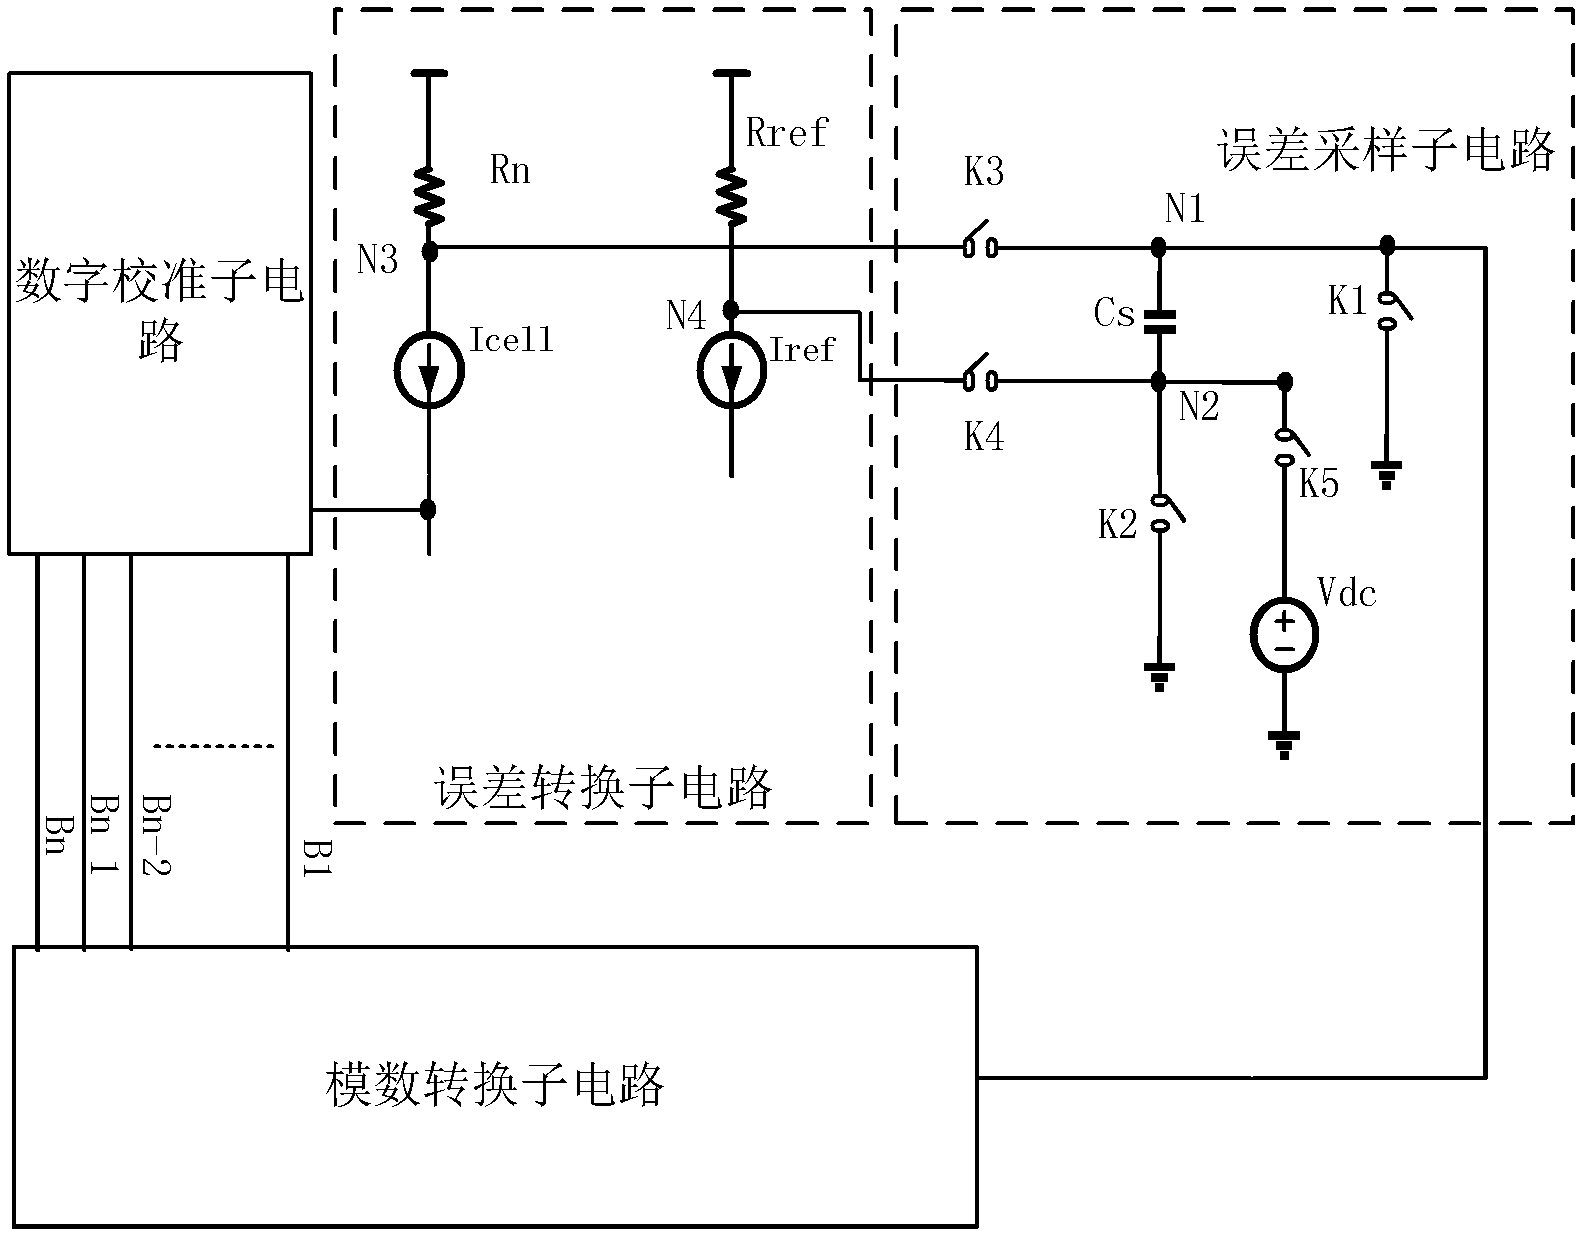 Self-calibrating circuit of current source